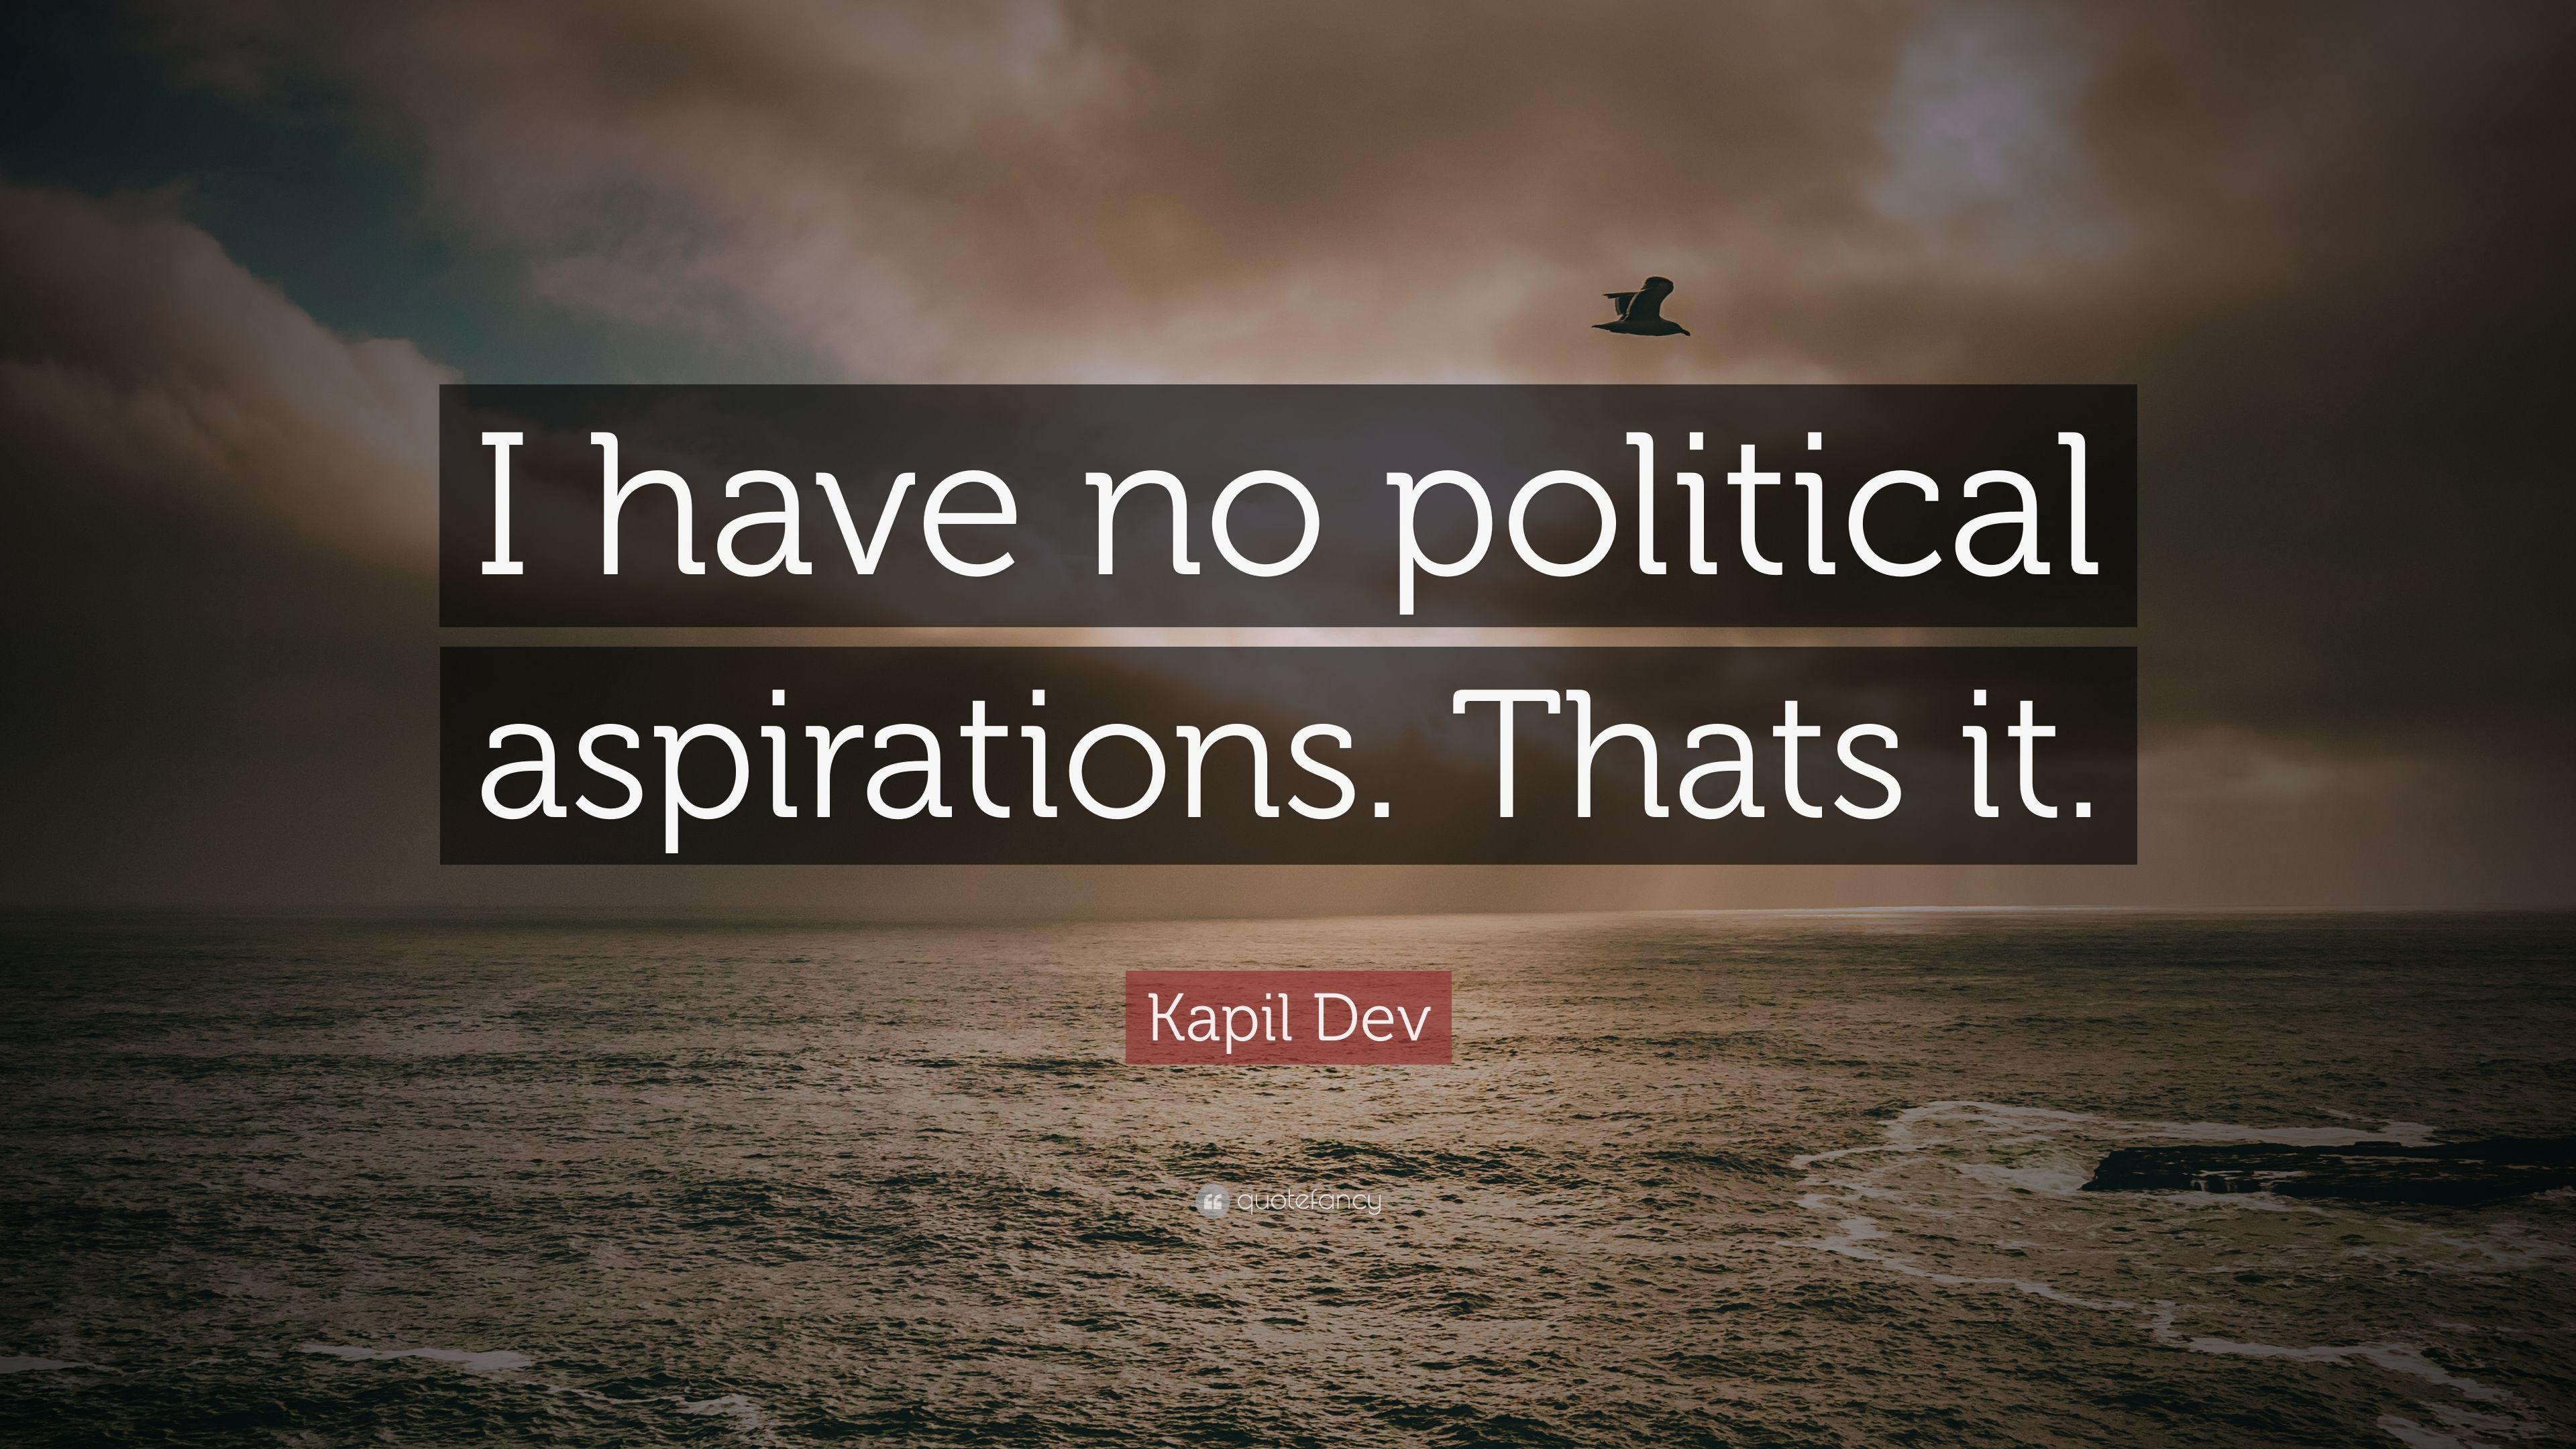 Kapil Dev Quote: “I have no political aspirations. Thats it.” 7